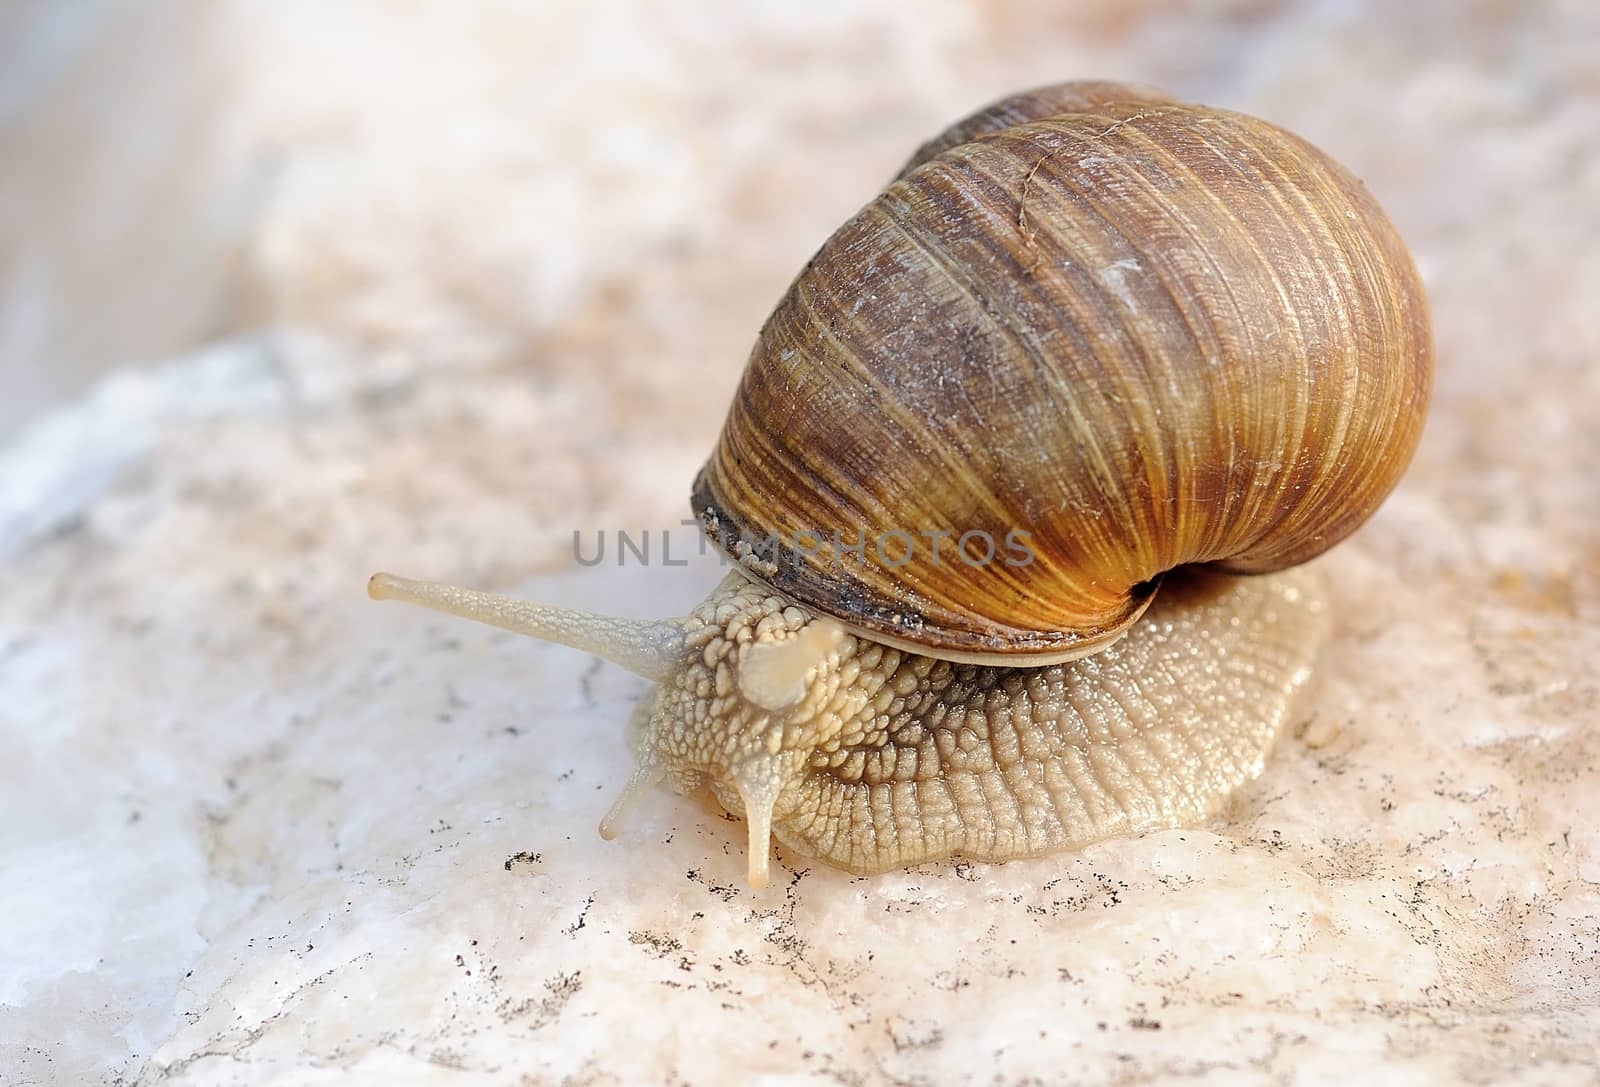 Small snail by hamik